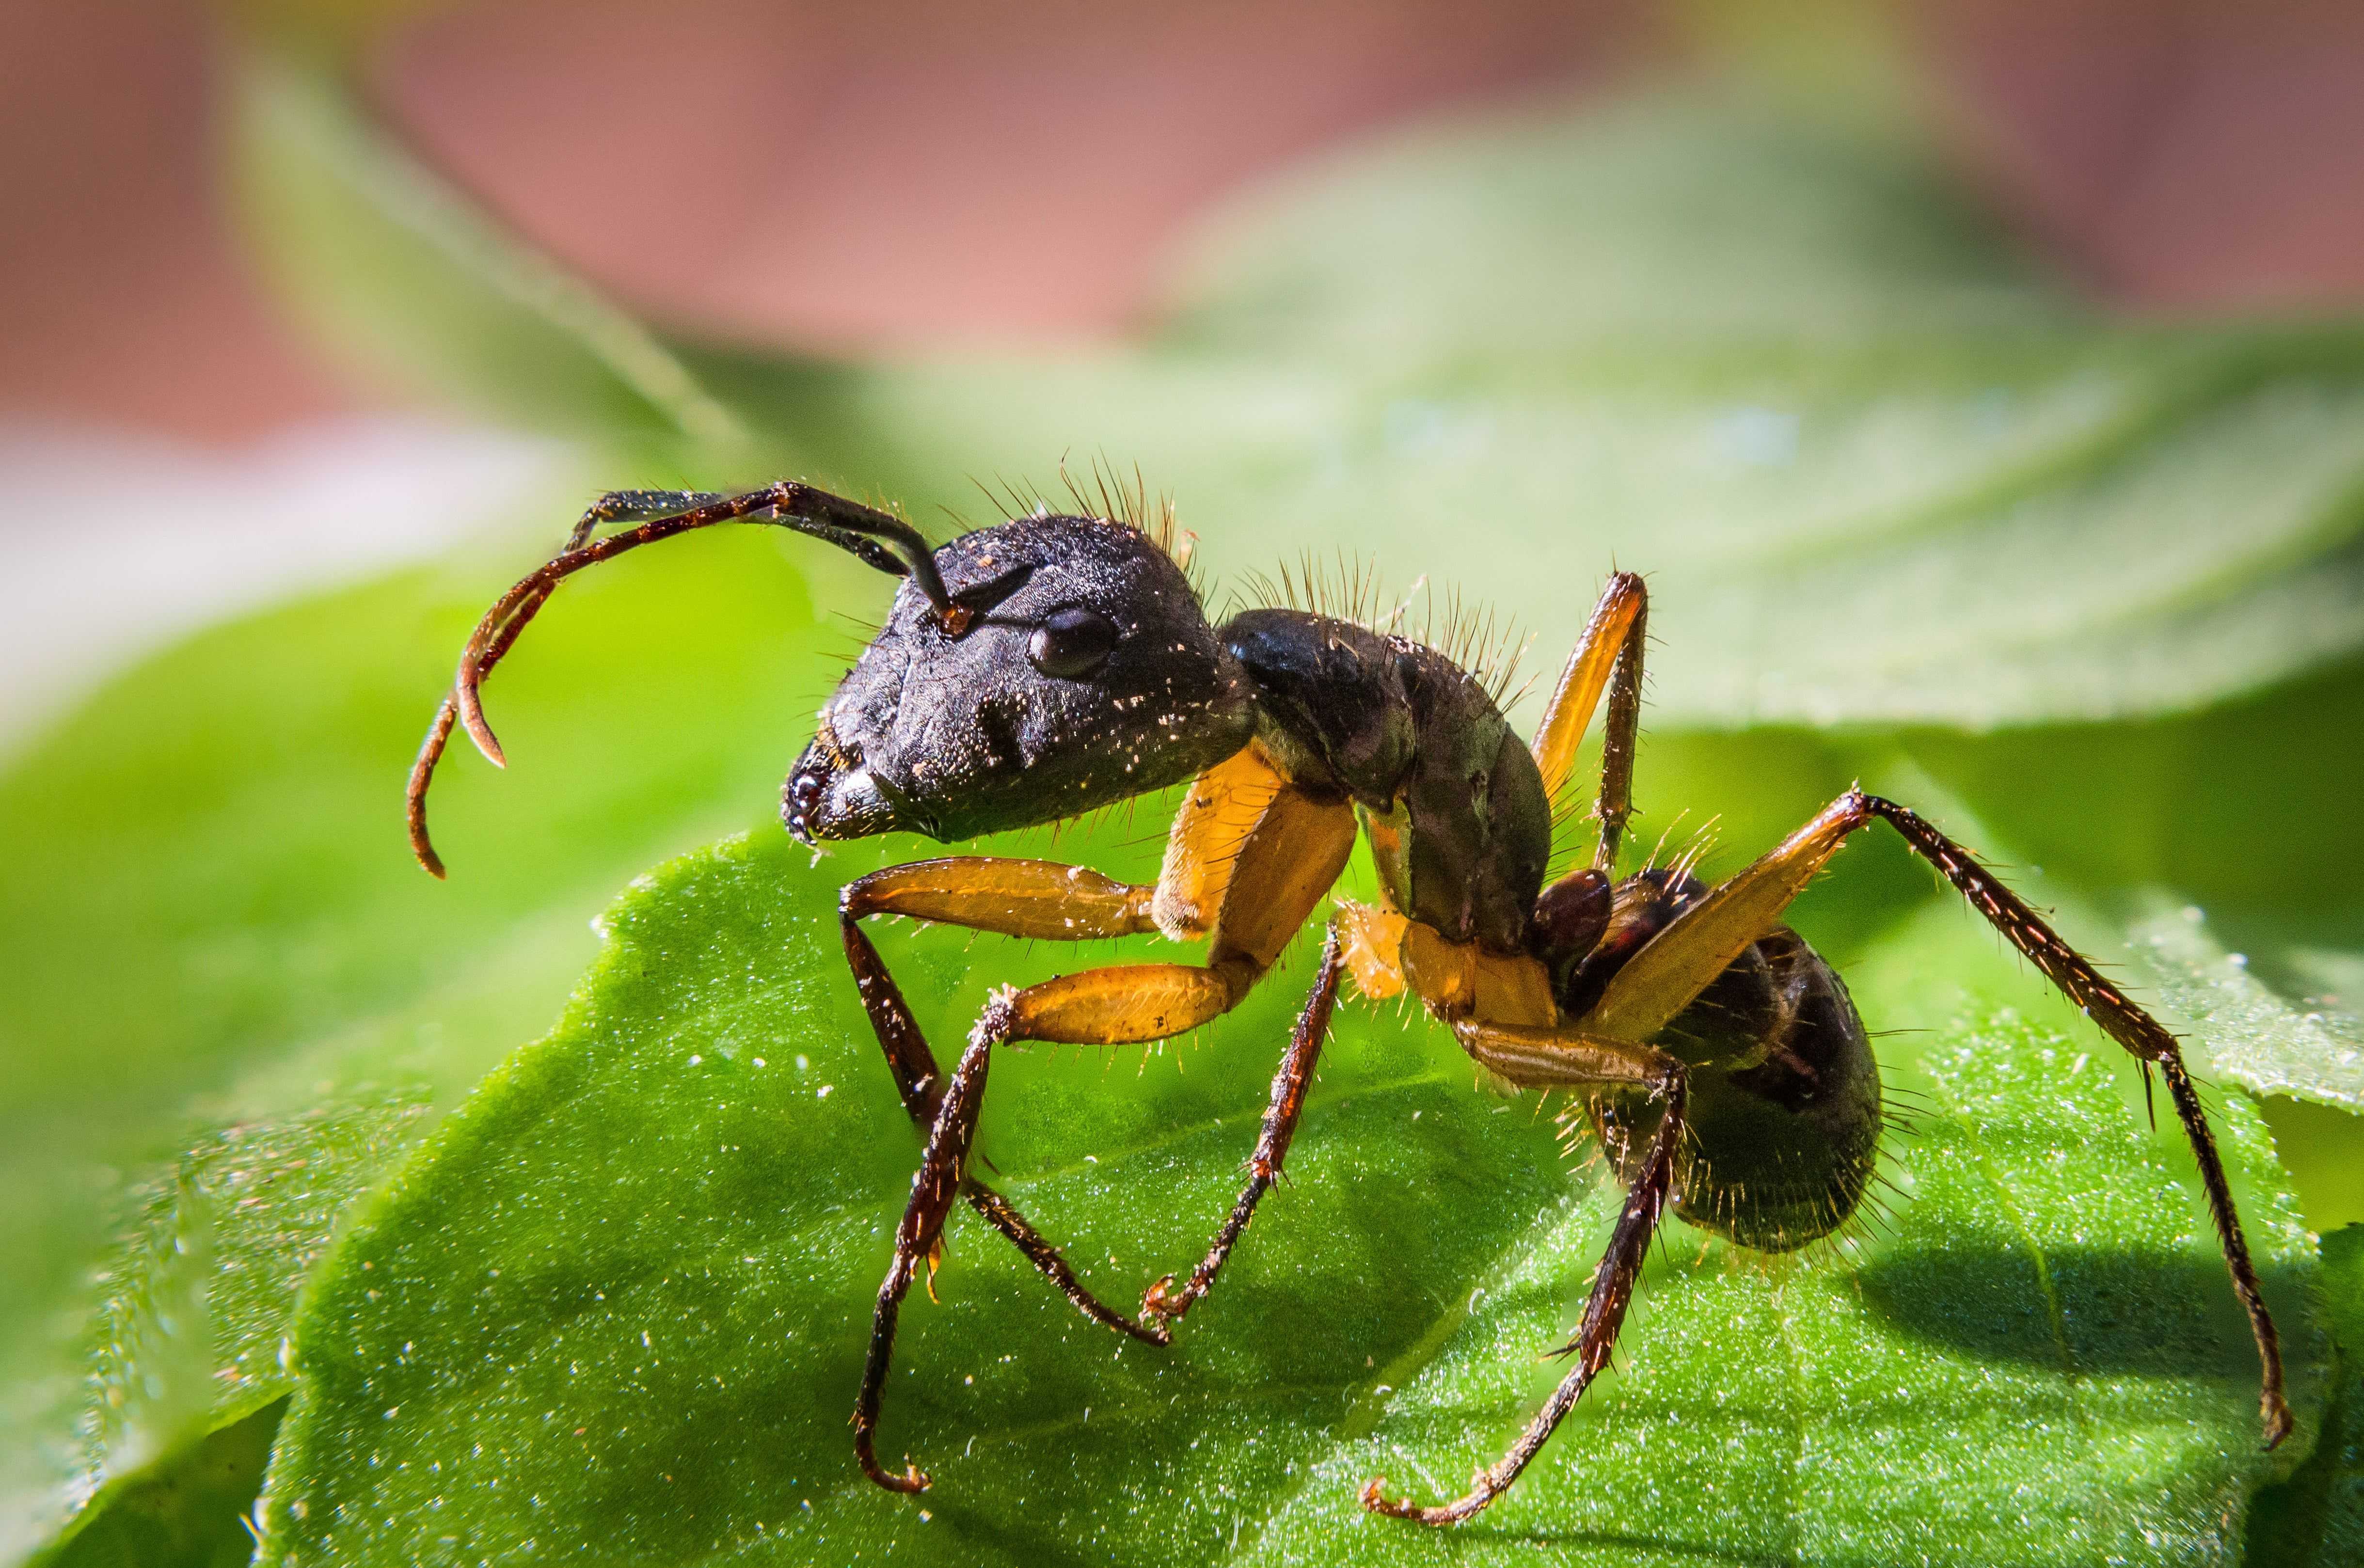 Ant in Florida sitting on a leaf